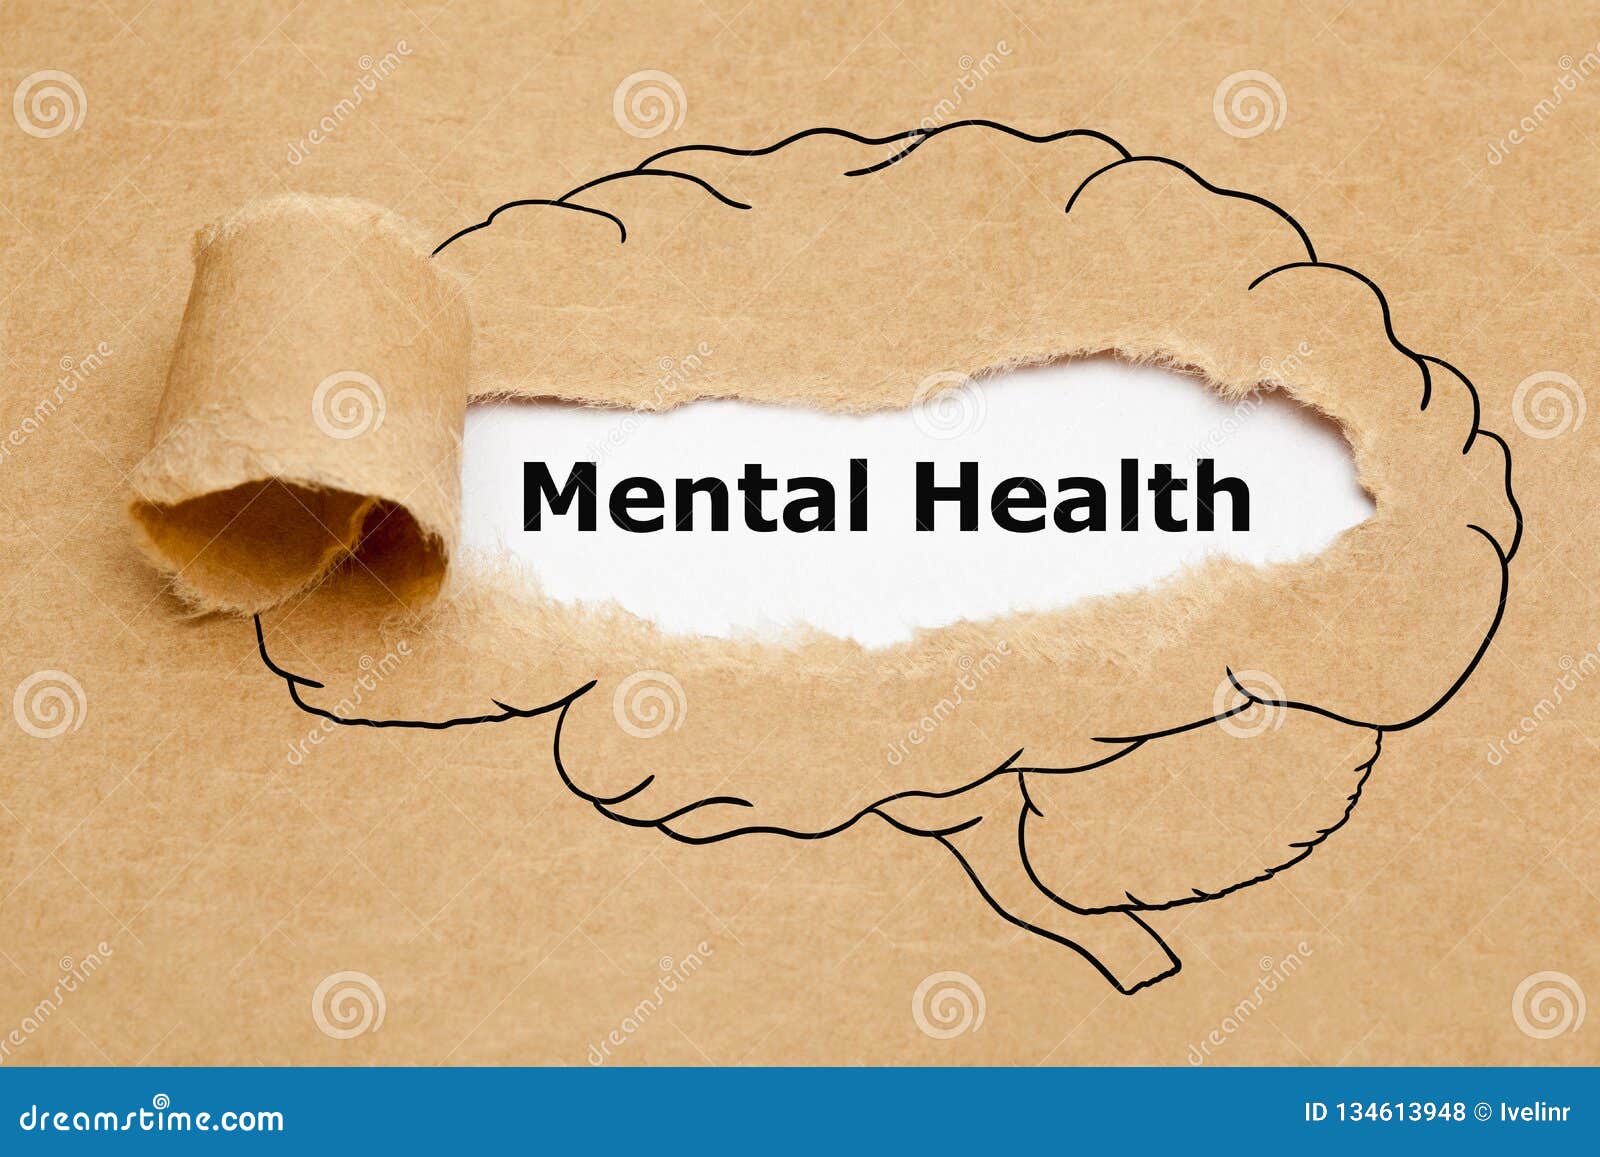 mental health brain torn paper concept